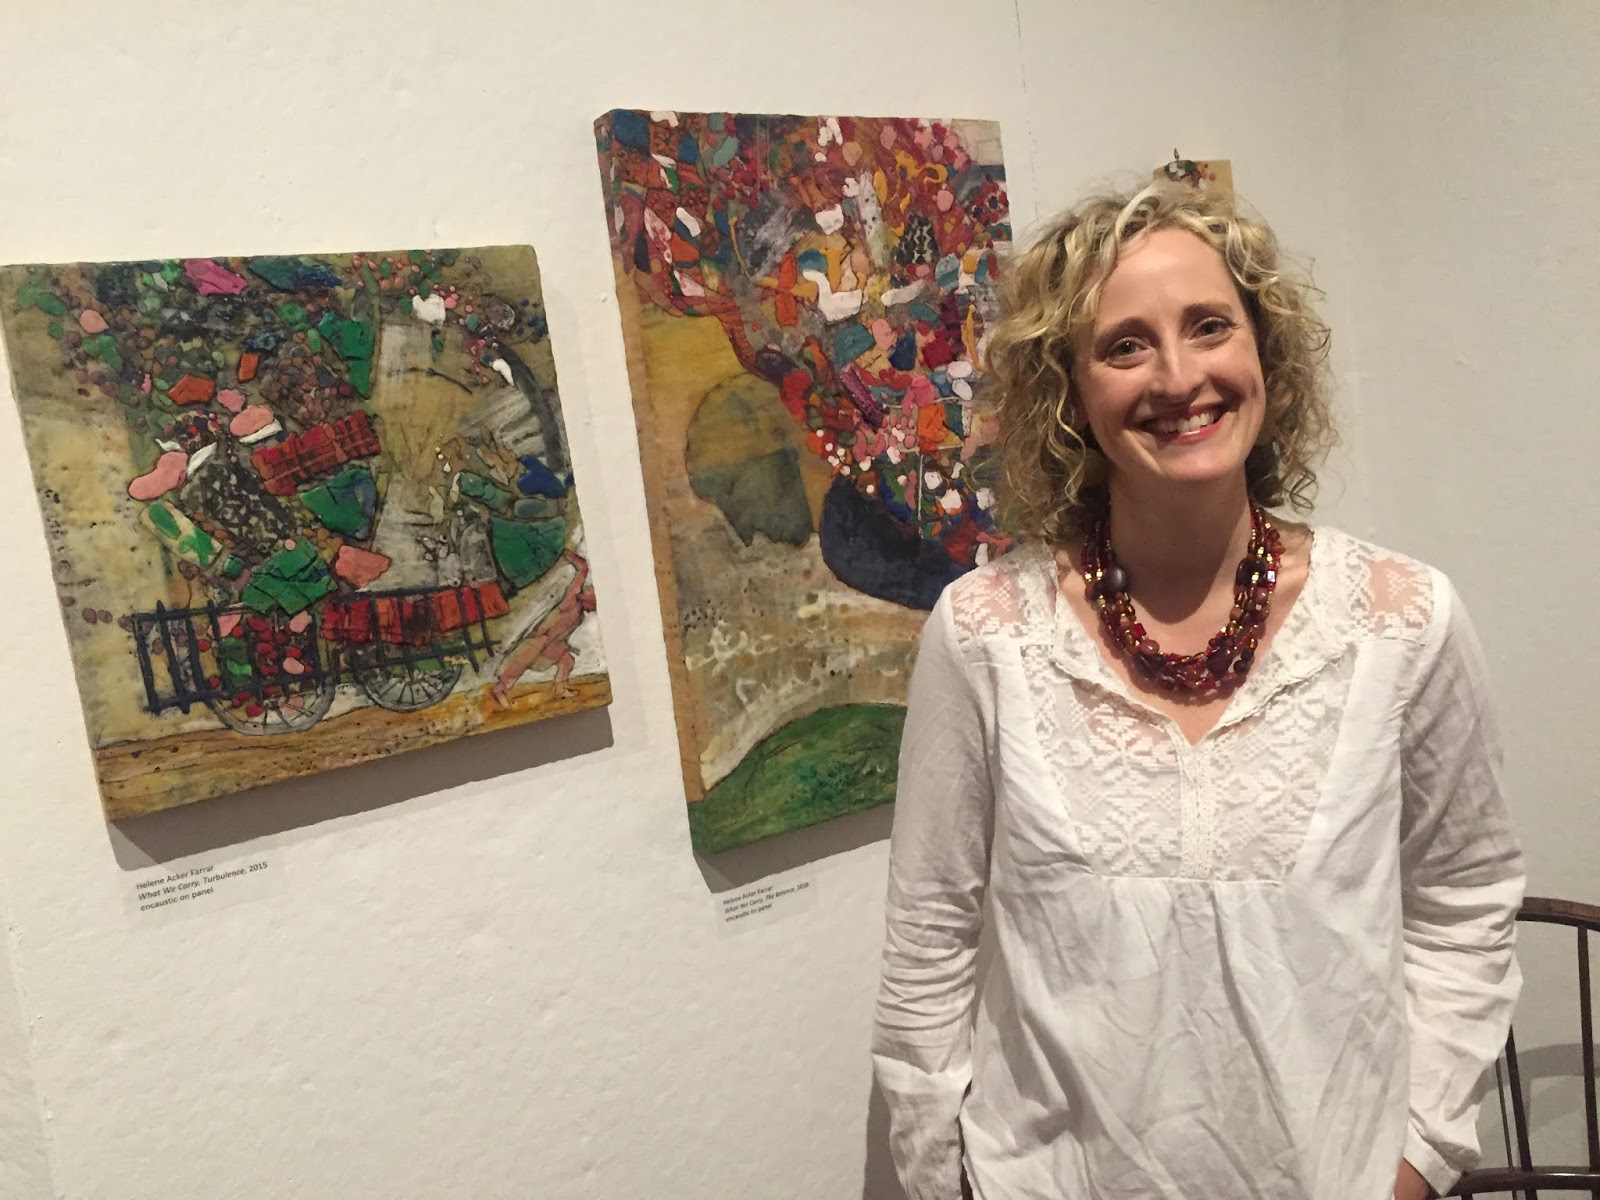 Catch the Artbug with Hélène Farrar Art